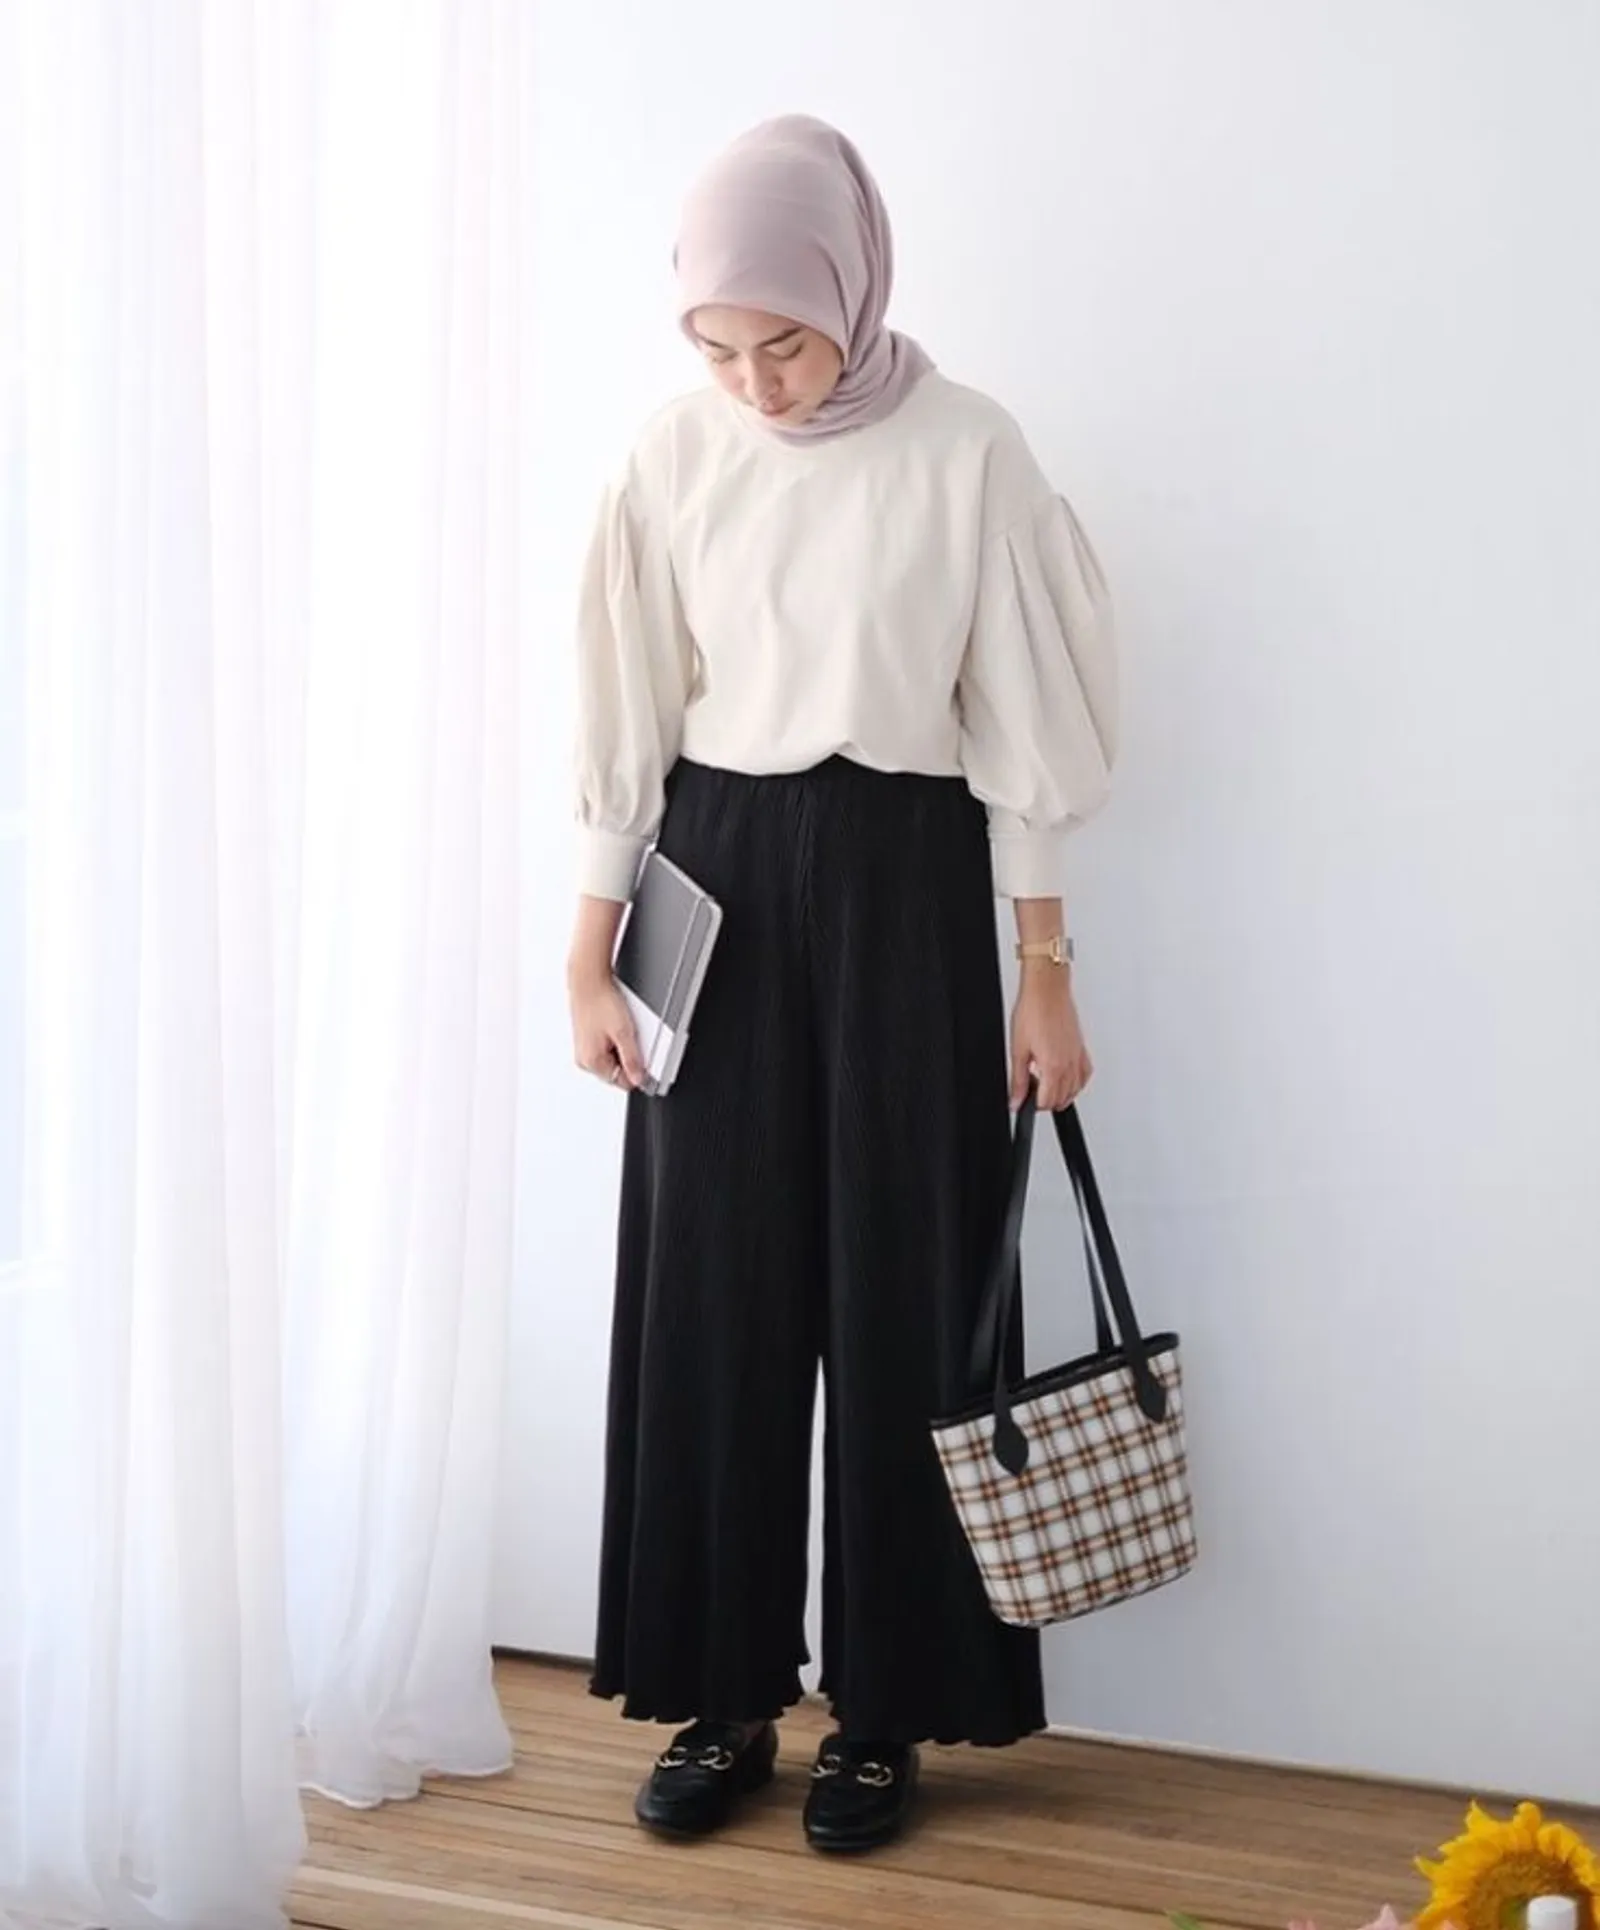 13 OOTD Baju Putih Celana Hitam Hijab, Manis dan Fashionable!